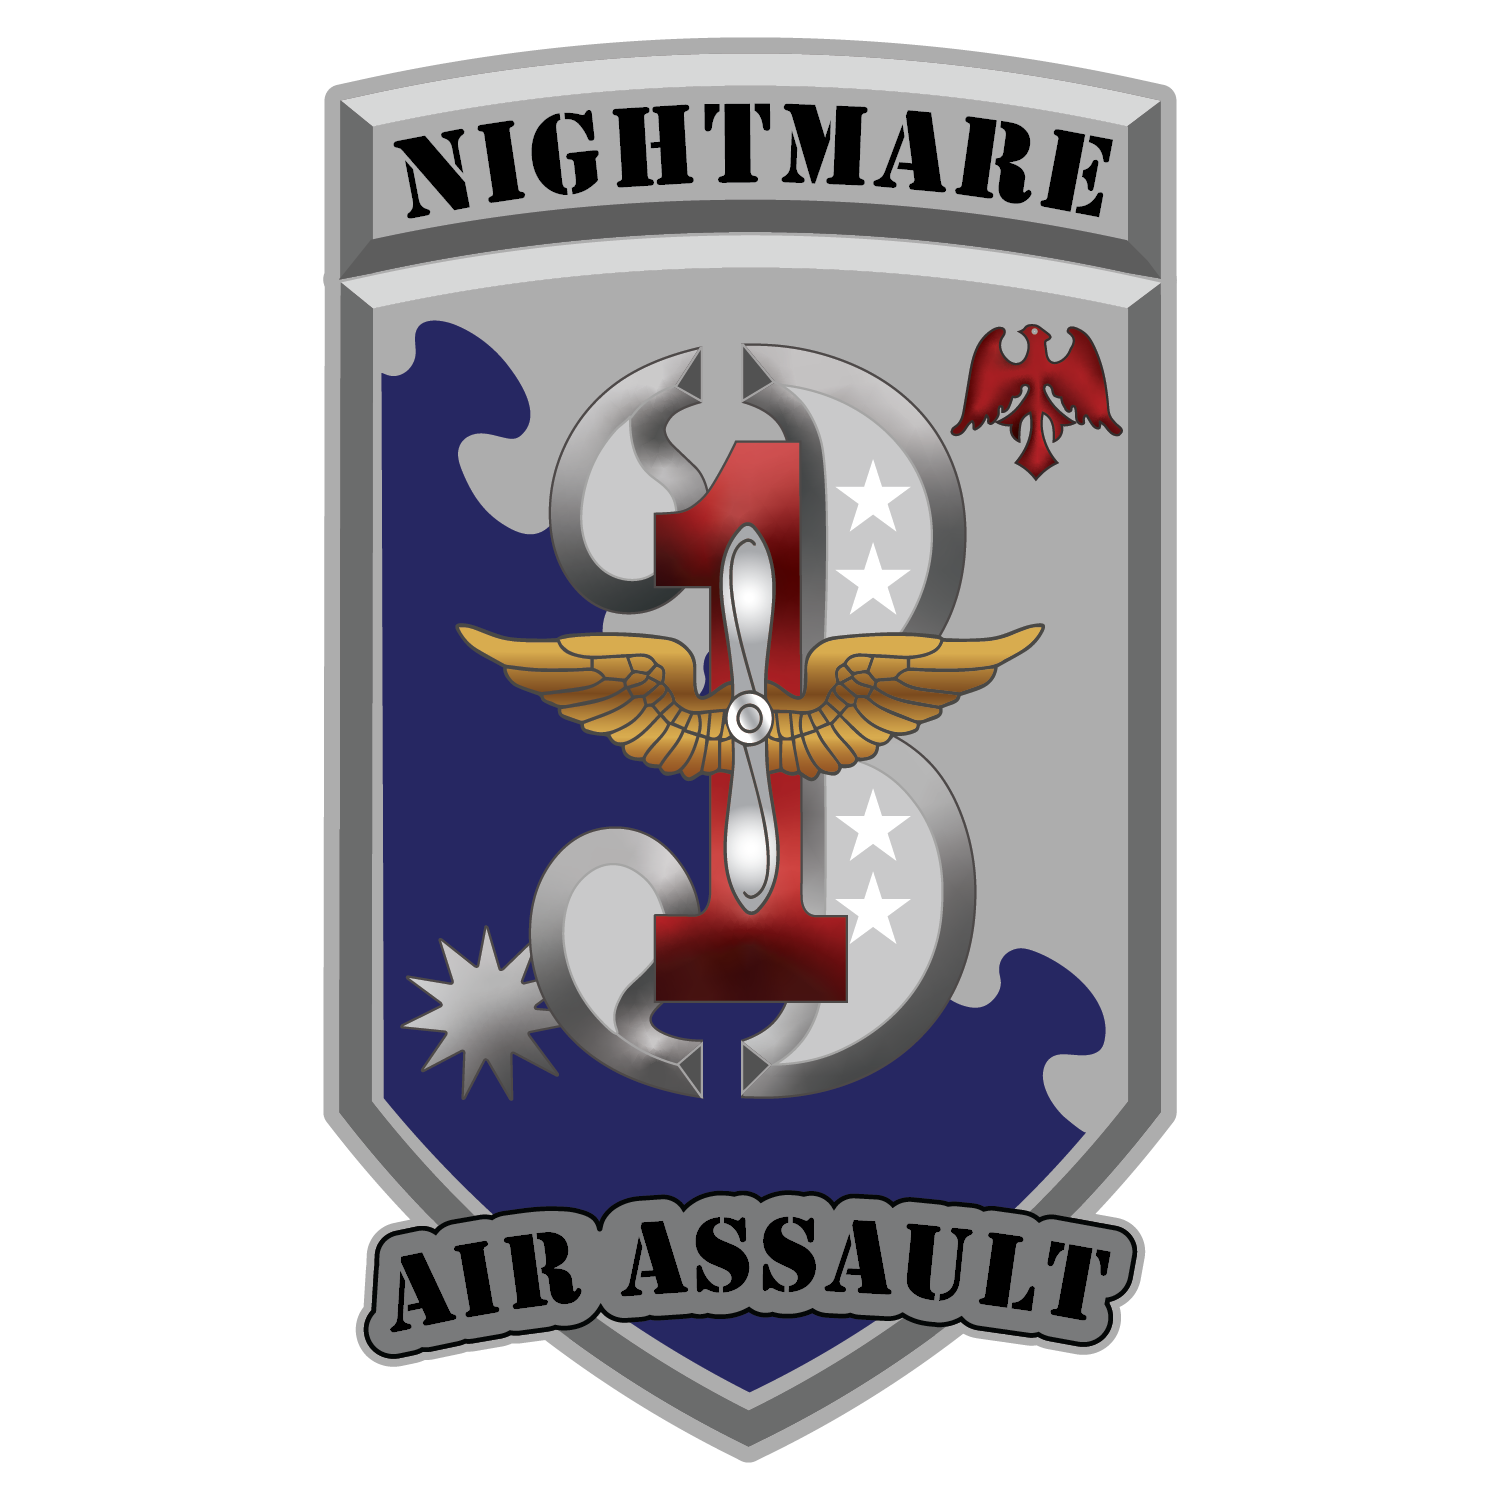 3-1 AHB "Task Force Nightmare"